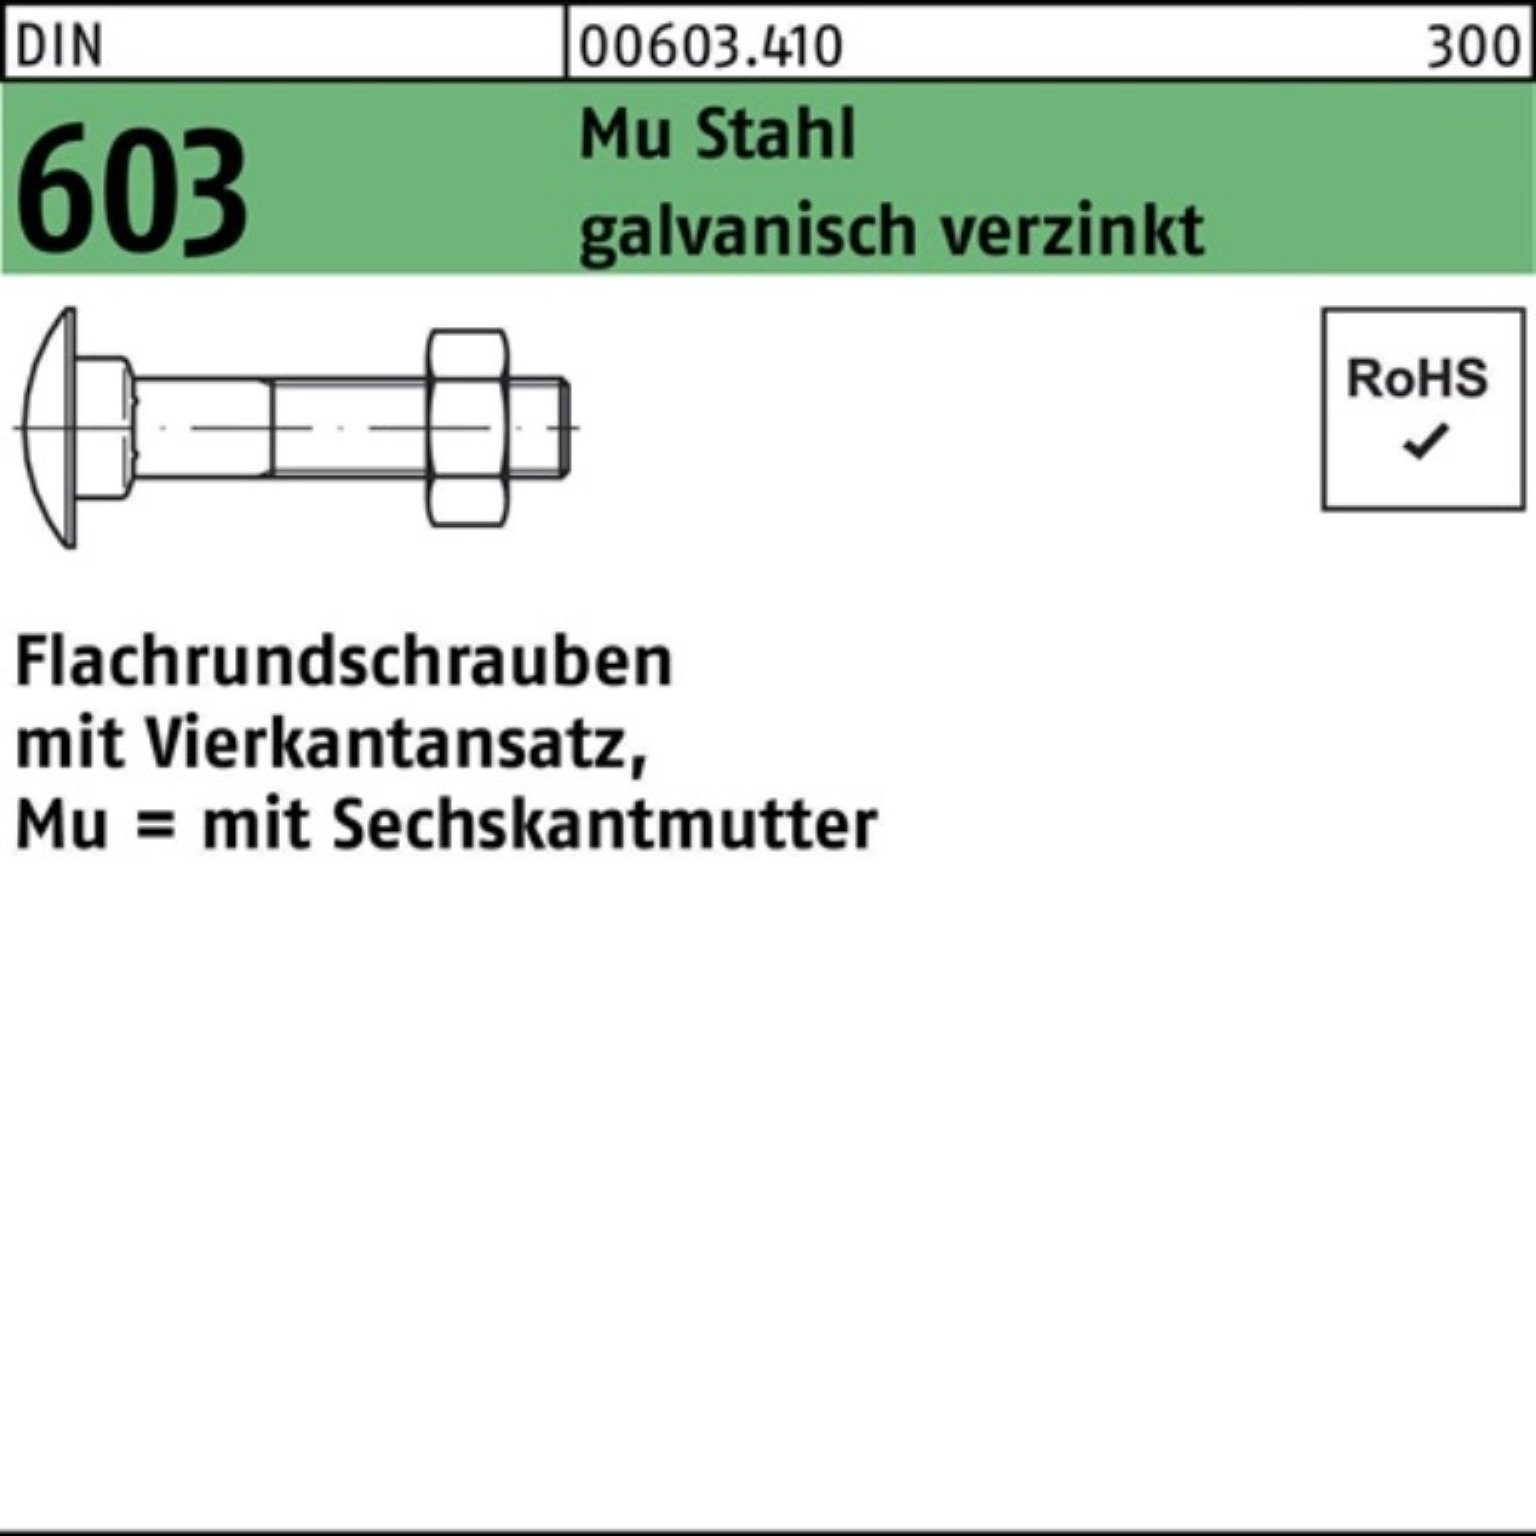 Reyher Schraube 100er Pack Flachrundschraube DIN 603 Vierkantansatz/6-ktmutter M10x110